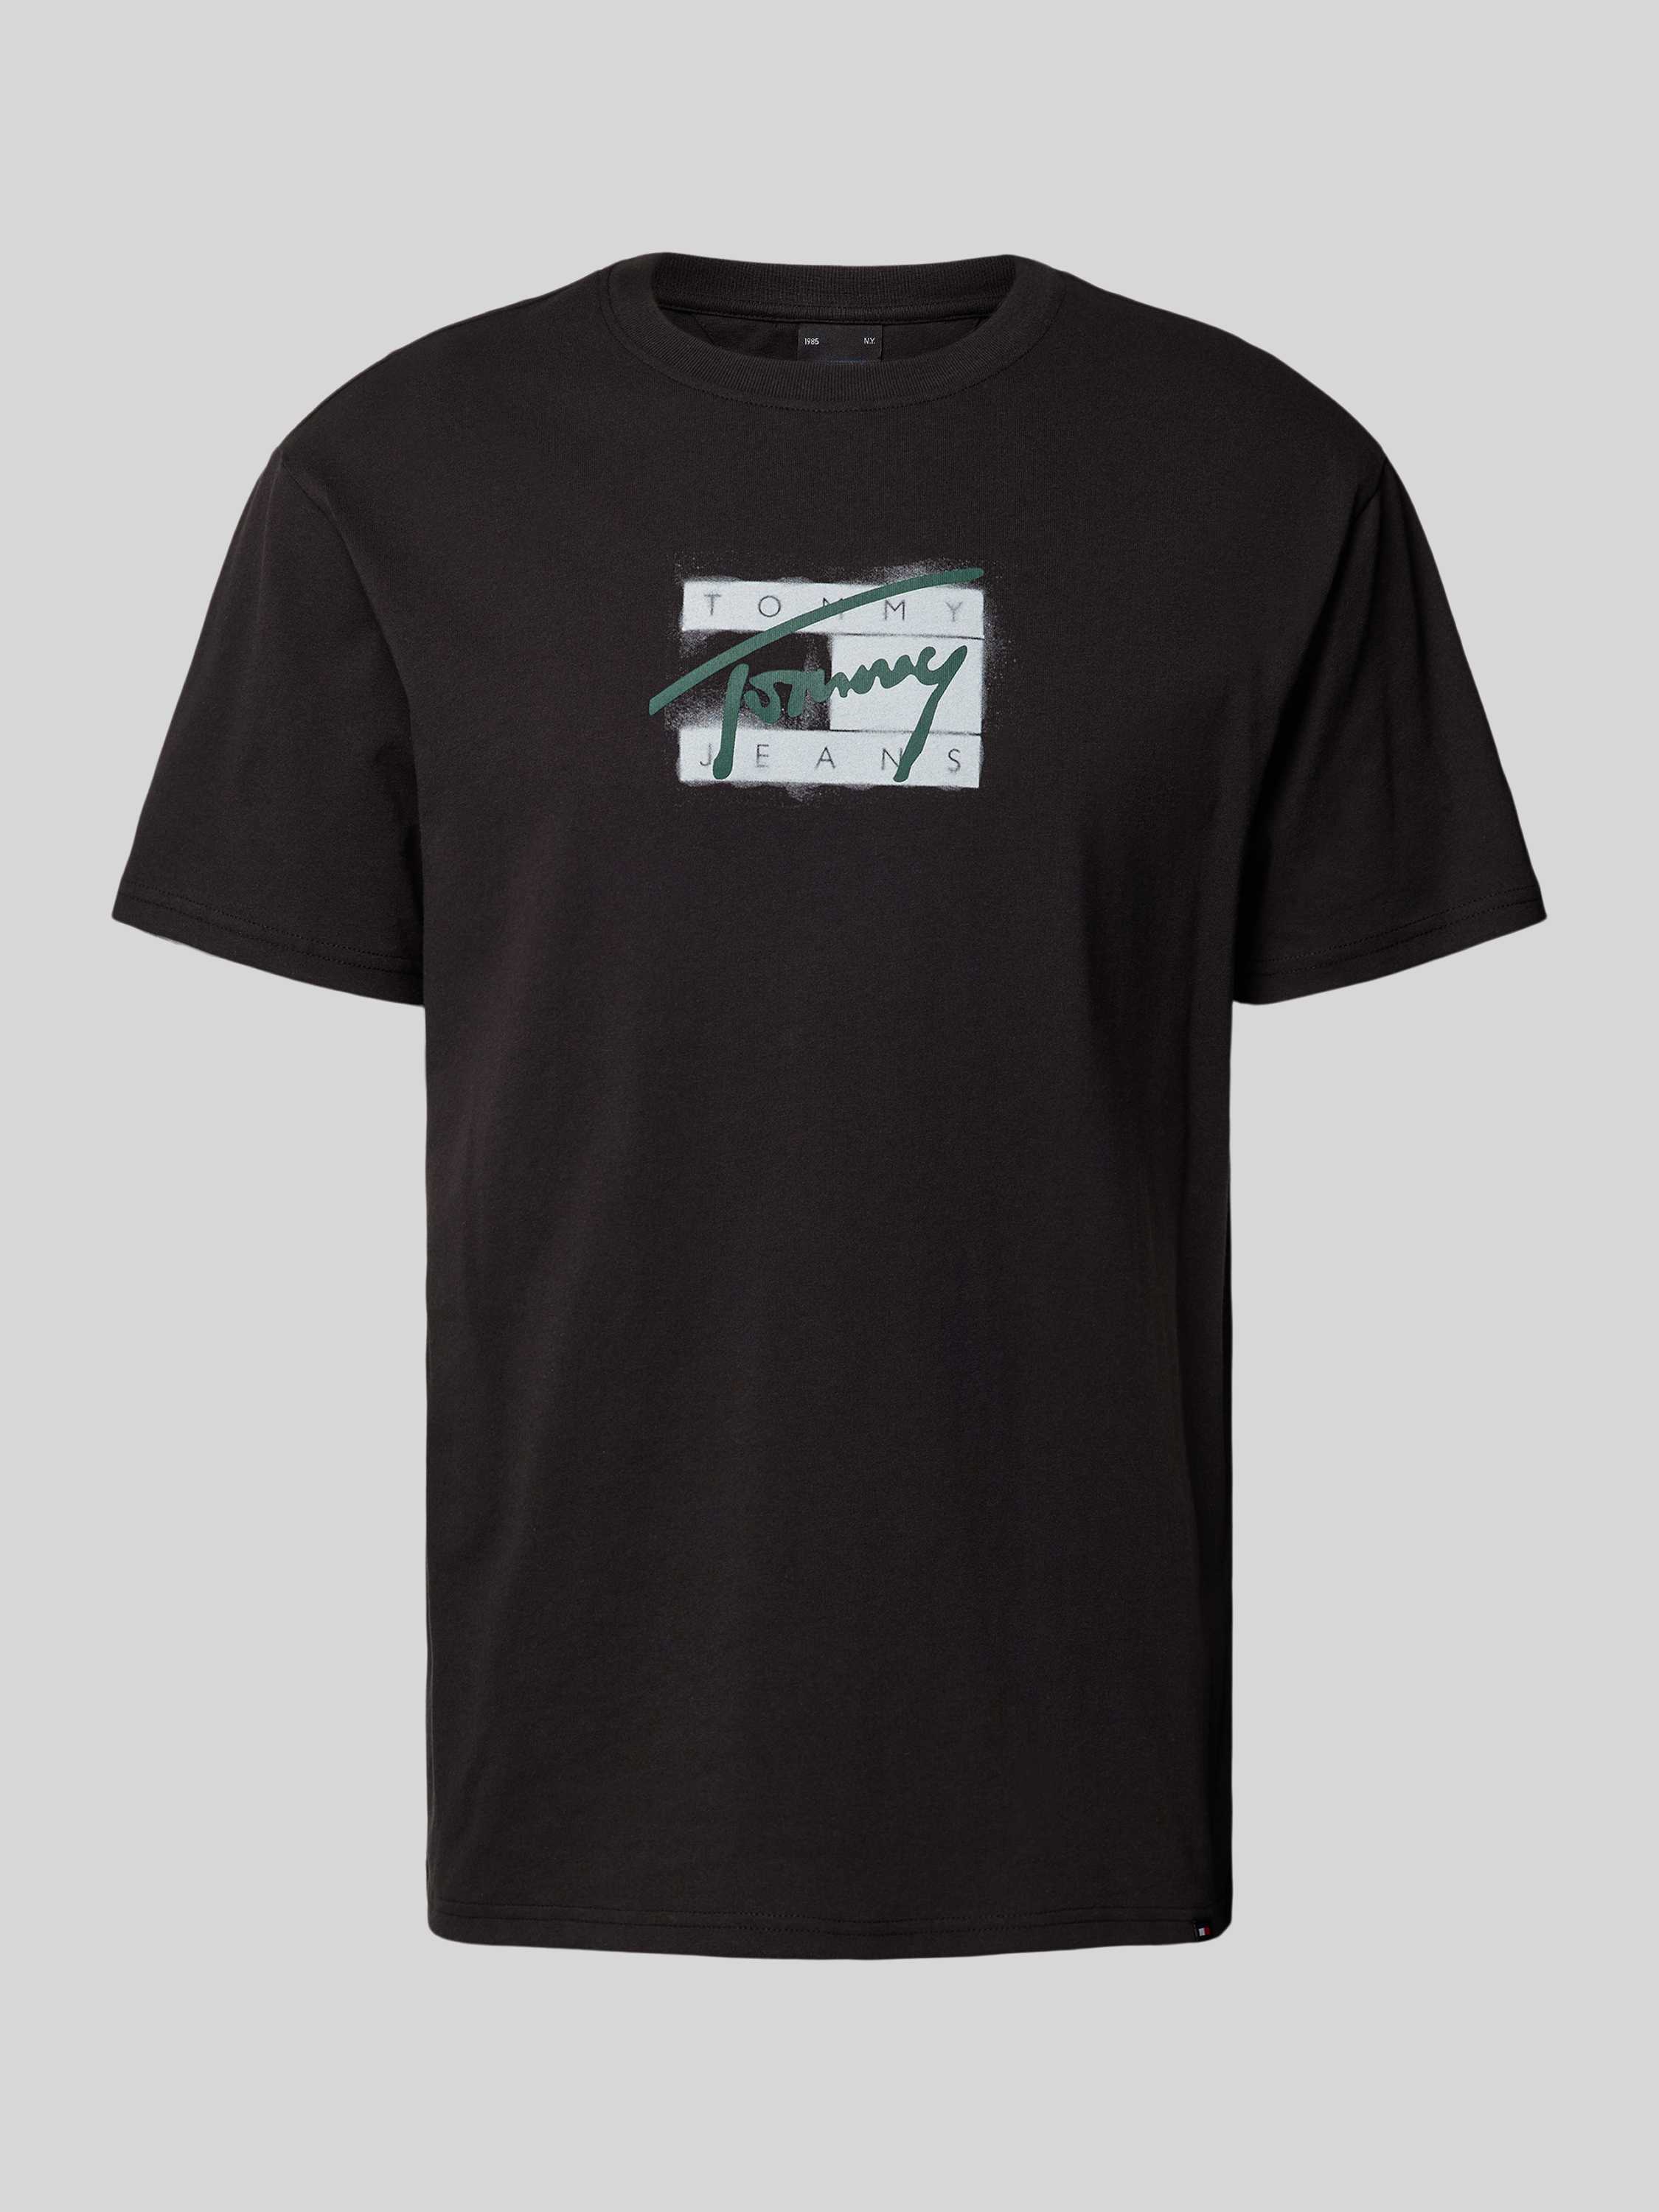 Tommy Jeans Street Sign T-Shirt Herfst Winter Collectie Black Heren